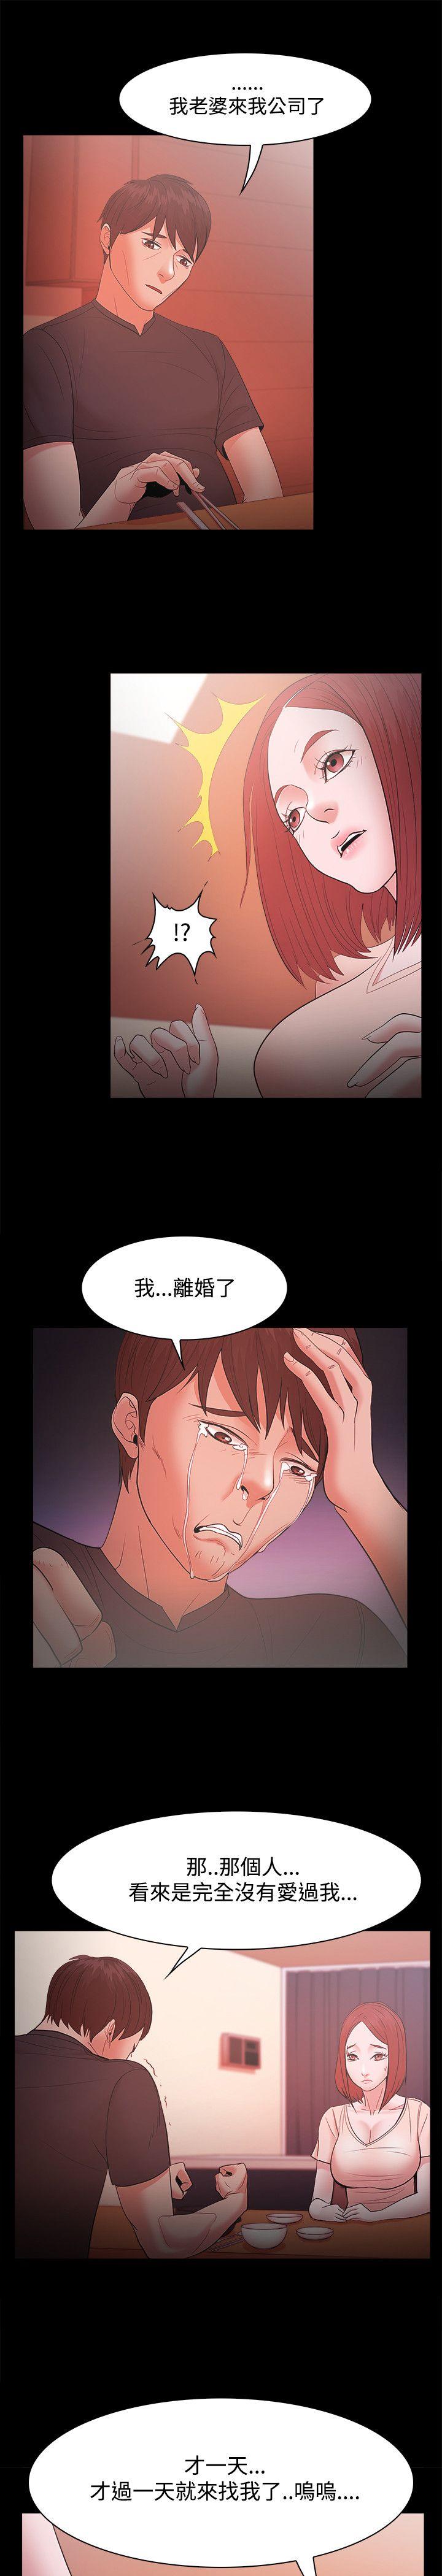 韩国污漫画 Loser 第17话 28